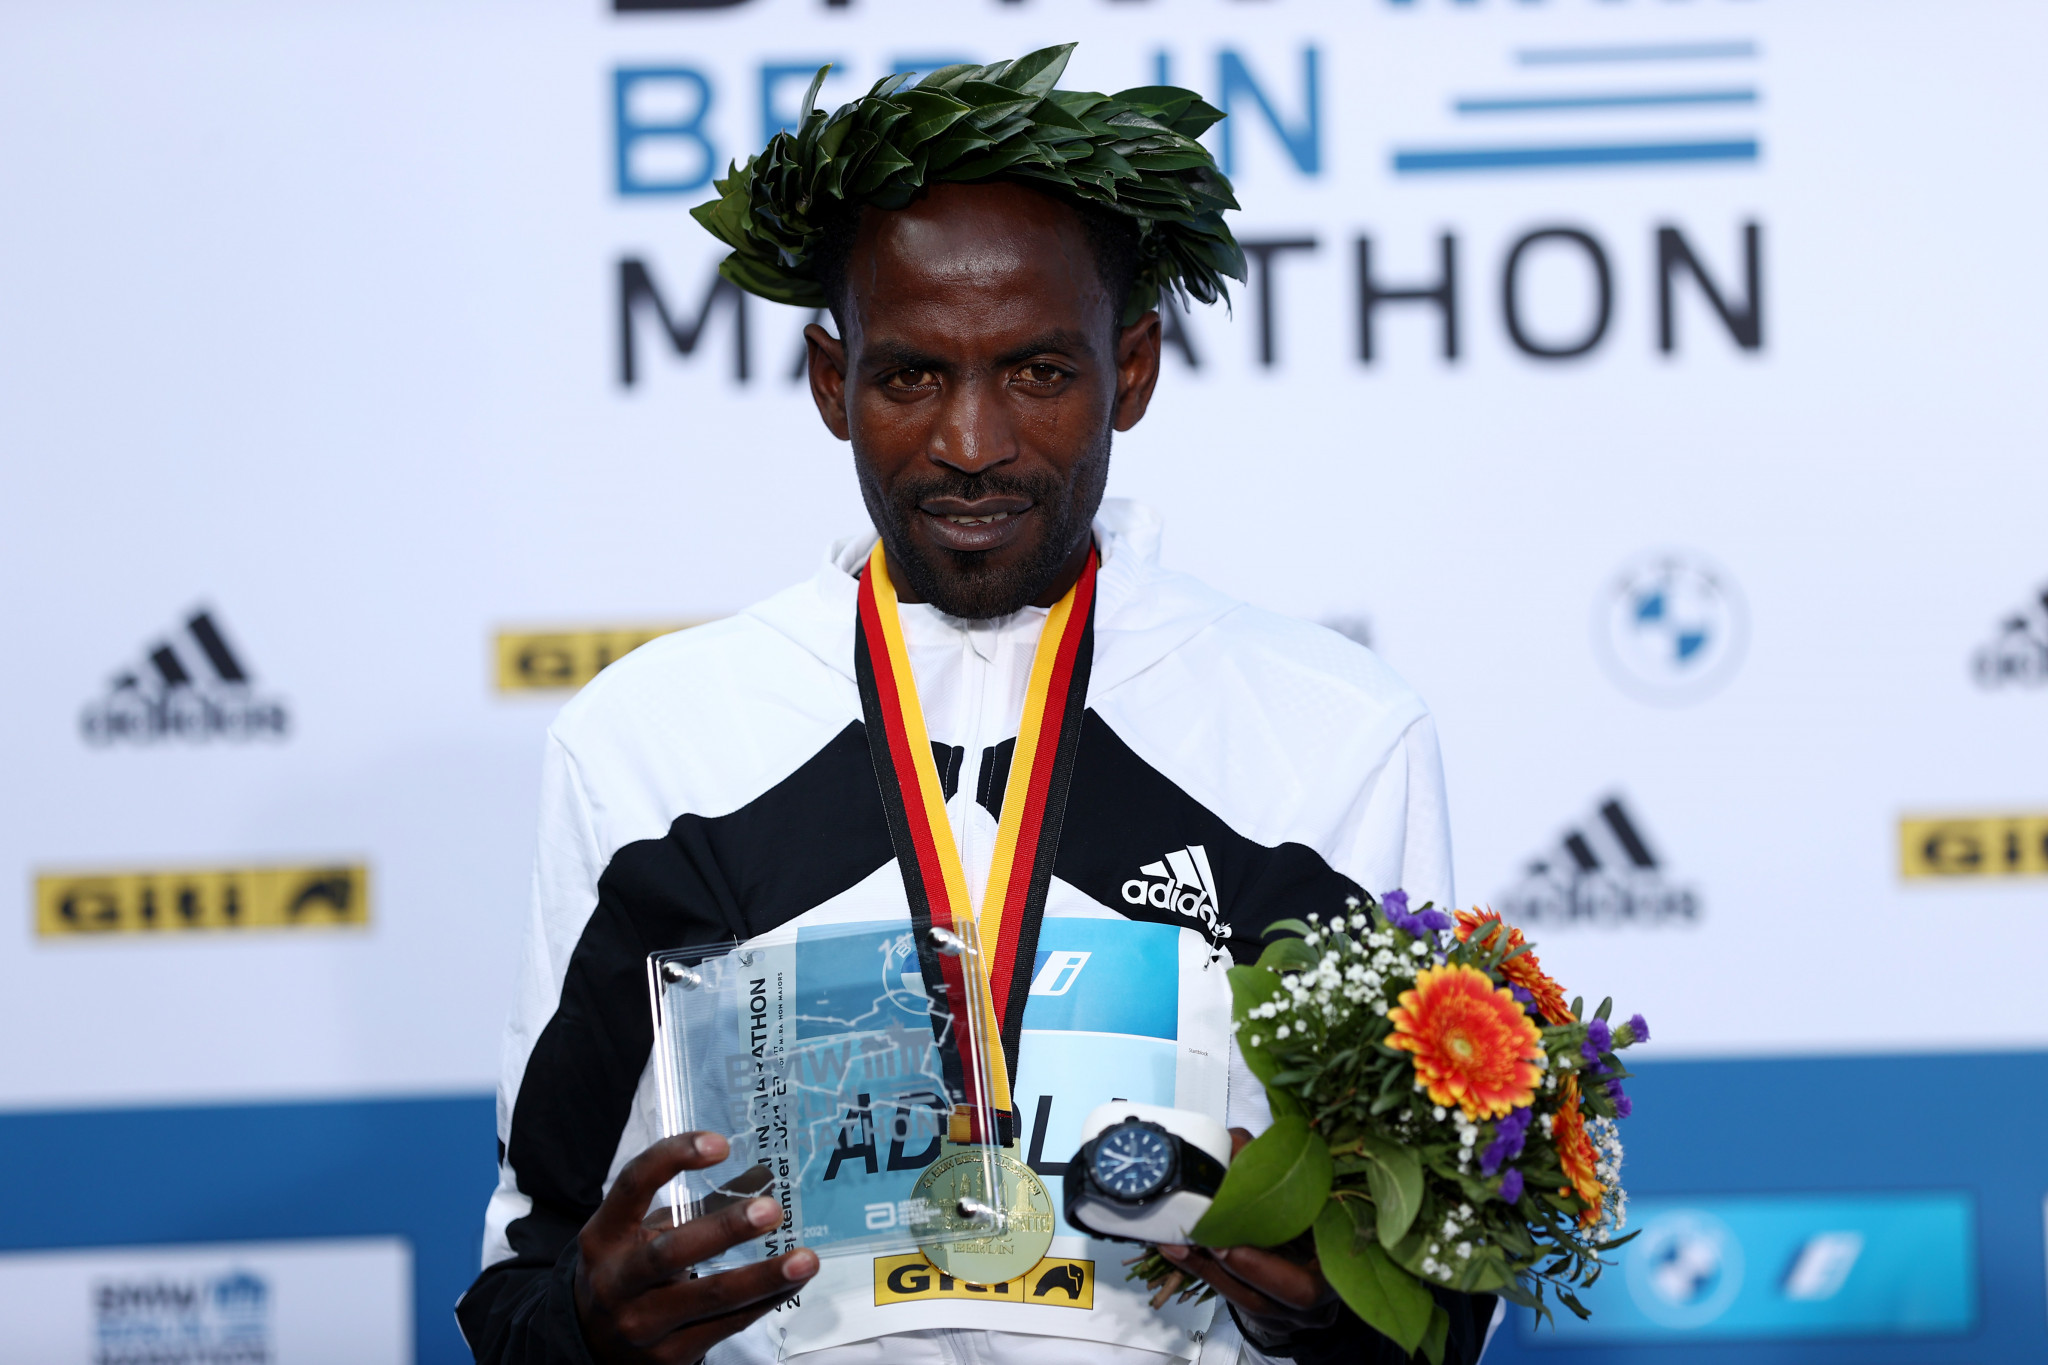 Guye Adola is the defending Berlin Marathon champion ©Getty Images